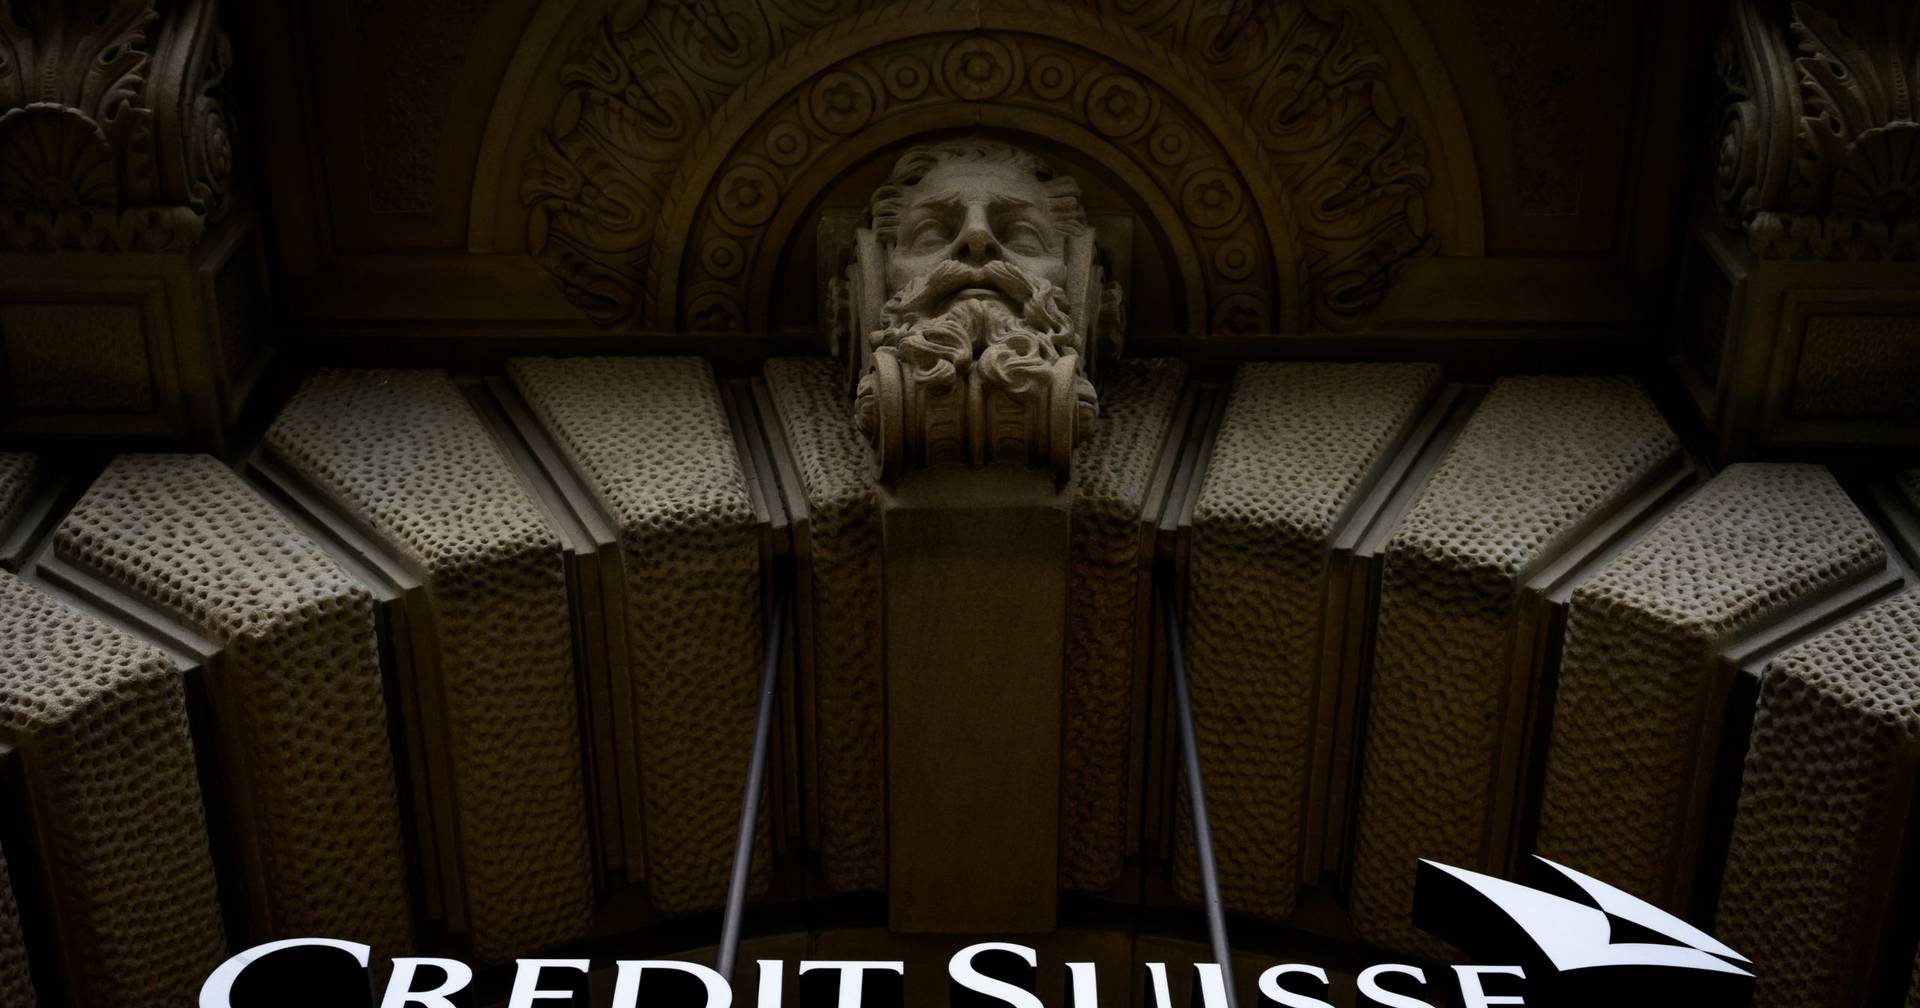 Credit Suisse enfrenta buraco de capital superior a 8 mil milhões de euros, estima Goldman Sachs